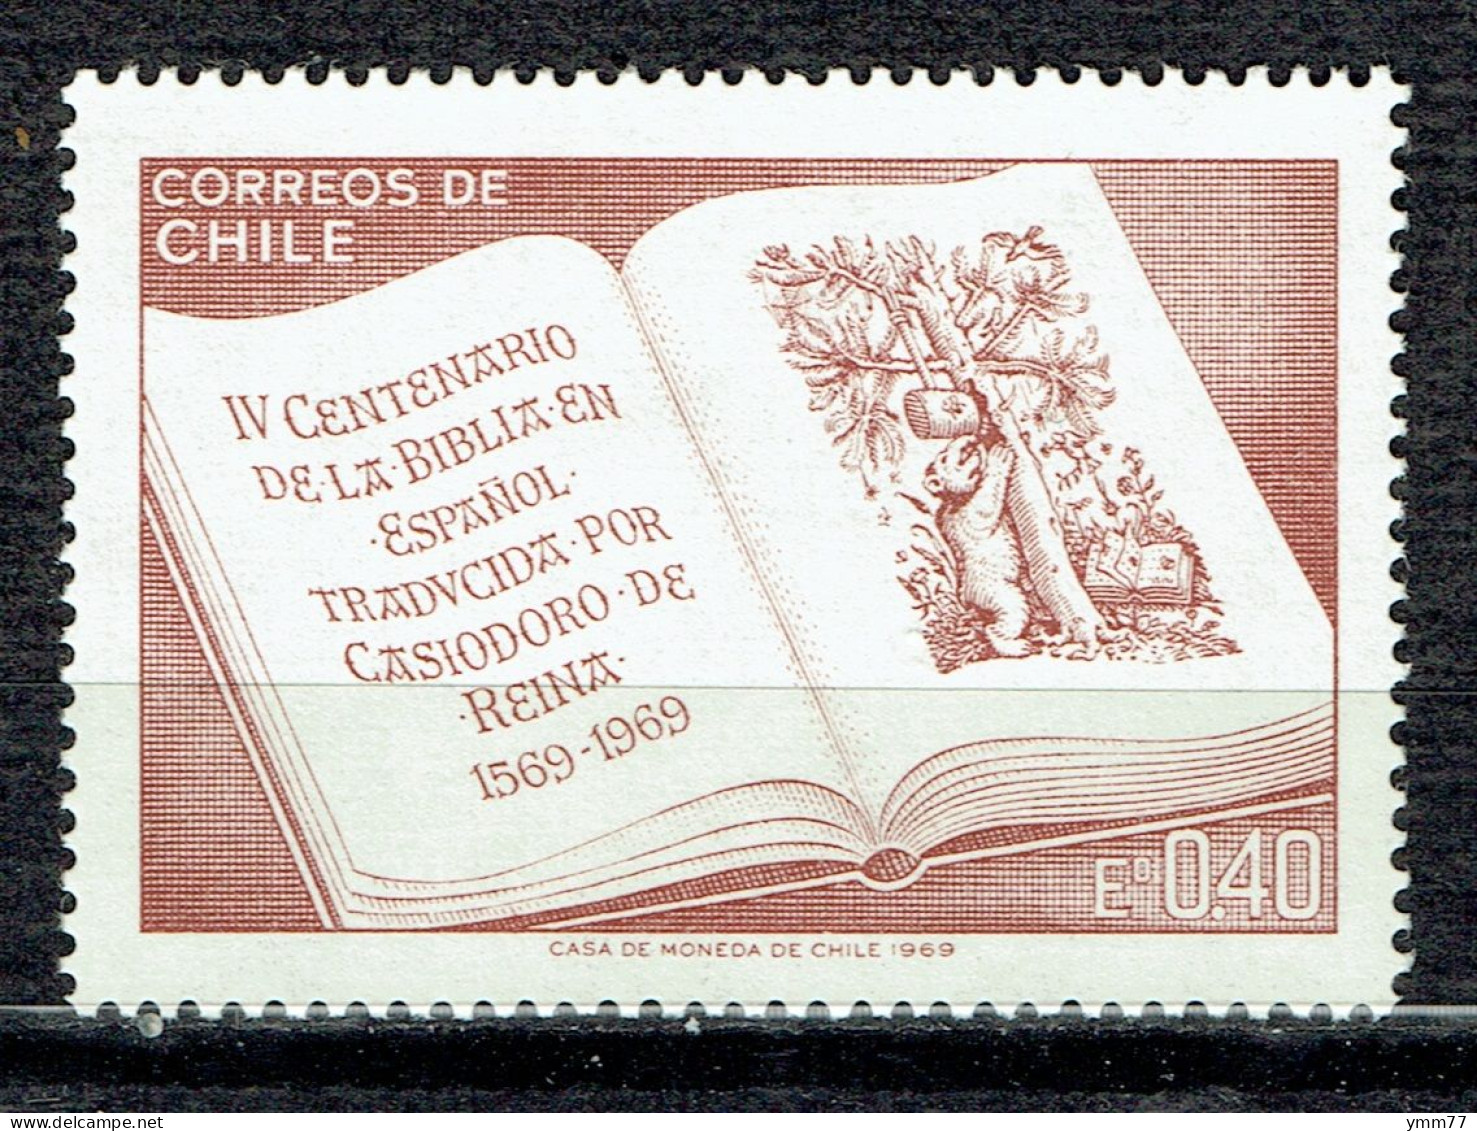 4ème Centenaire De La Bible En Espagnol Traduite Par Casiodoro De Reina - Chili